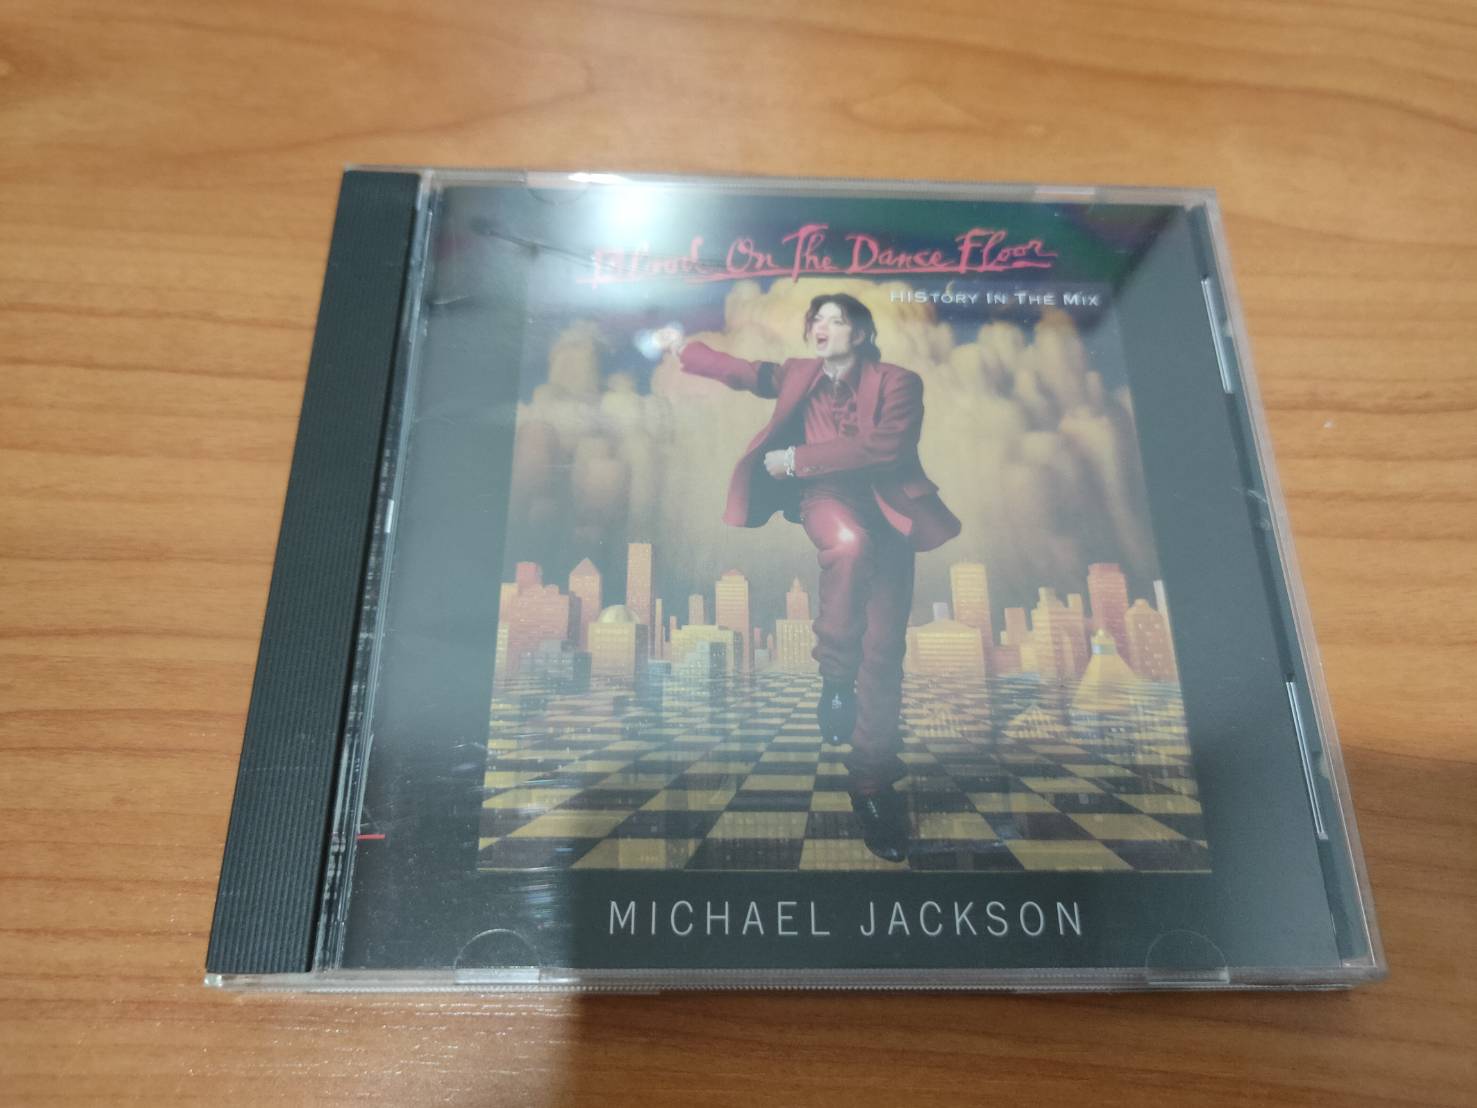 CD.MUSIC ซีดีเพลง เพลงสากล Michael Jackson #ไมเคิล #Blood On The Dance Floor (***โปรดดูภาพสินค้าอย่างละเอียดก่อนทำการสั่งซื้อ*** )